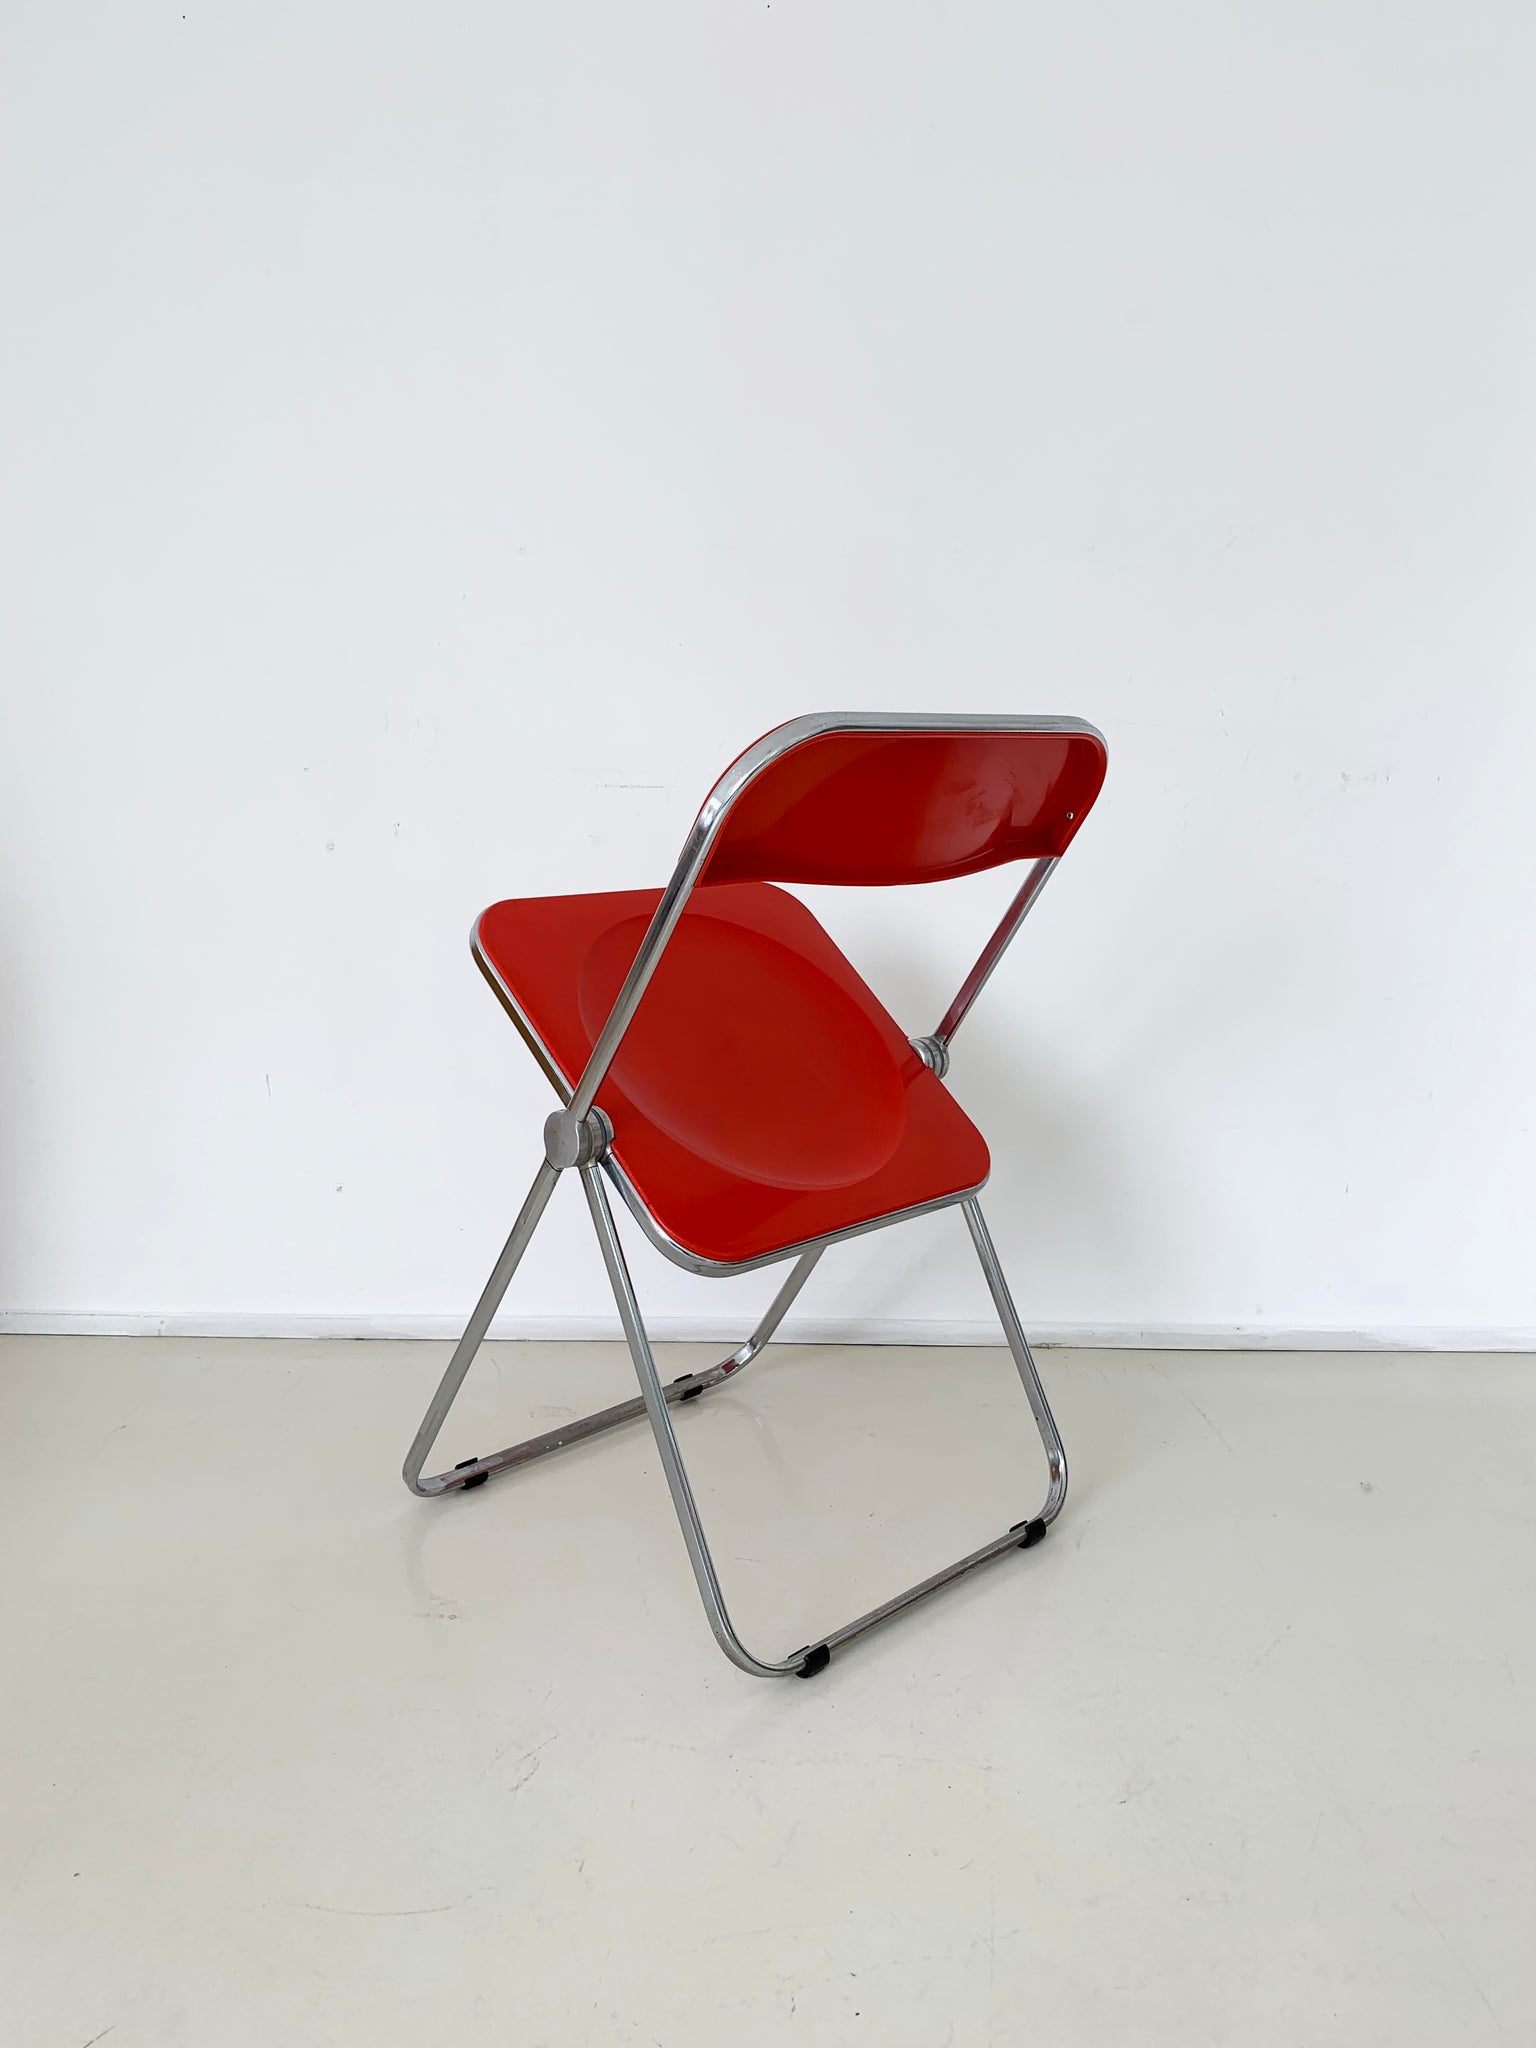 1970s Italian Plia Chairs by Giancarlo Piretti for Castelli - Cream, Butter,Red